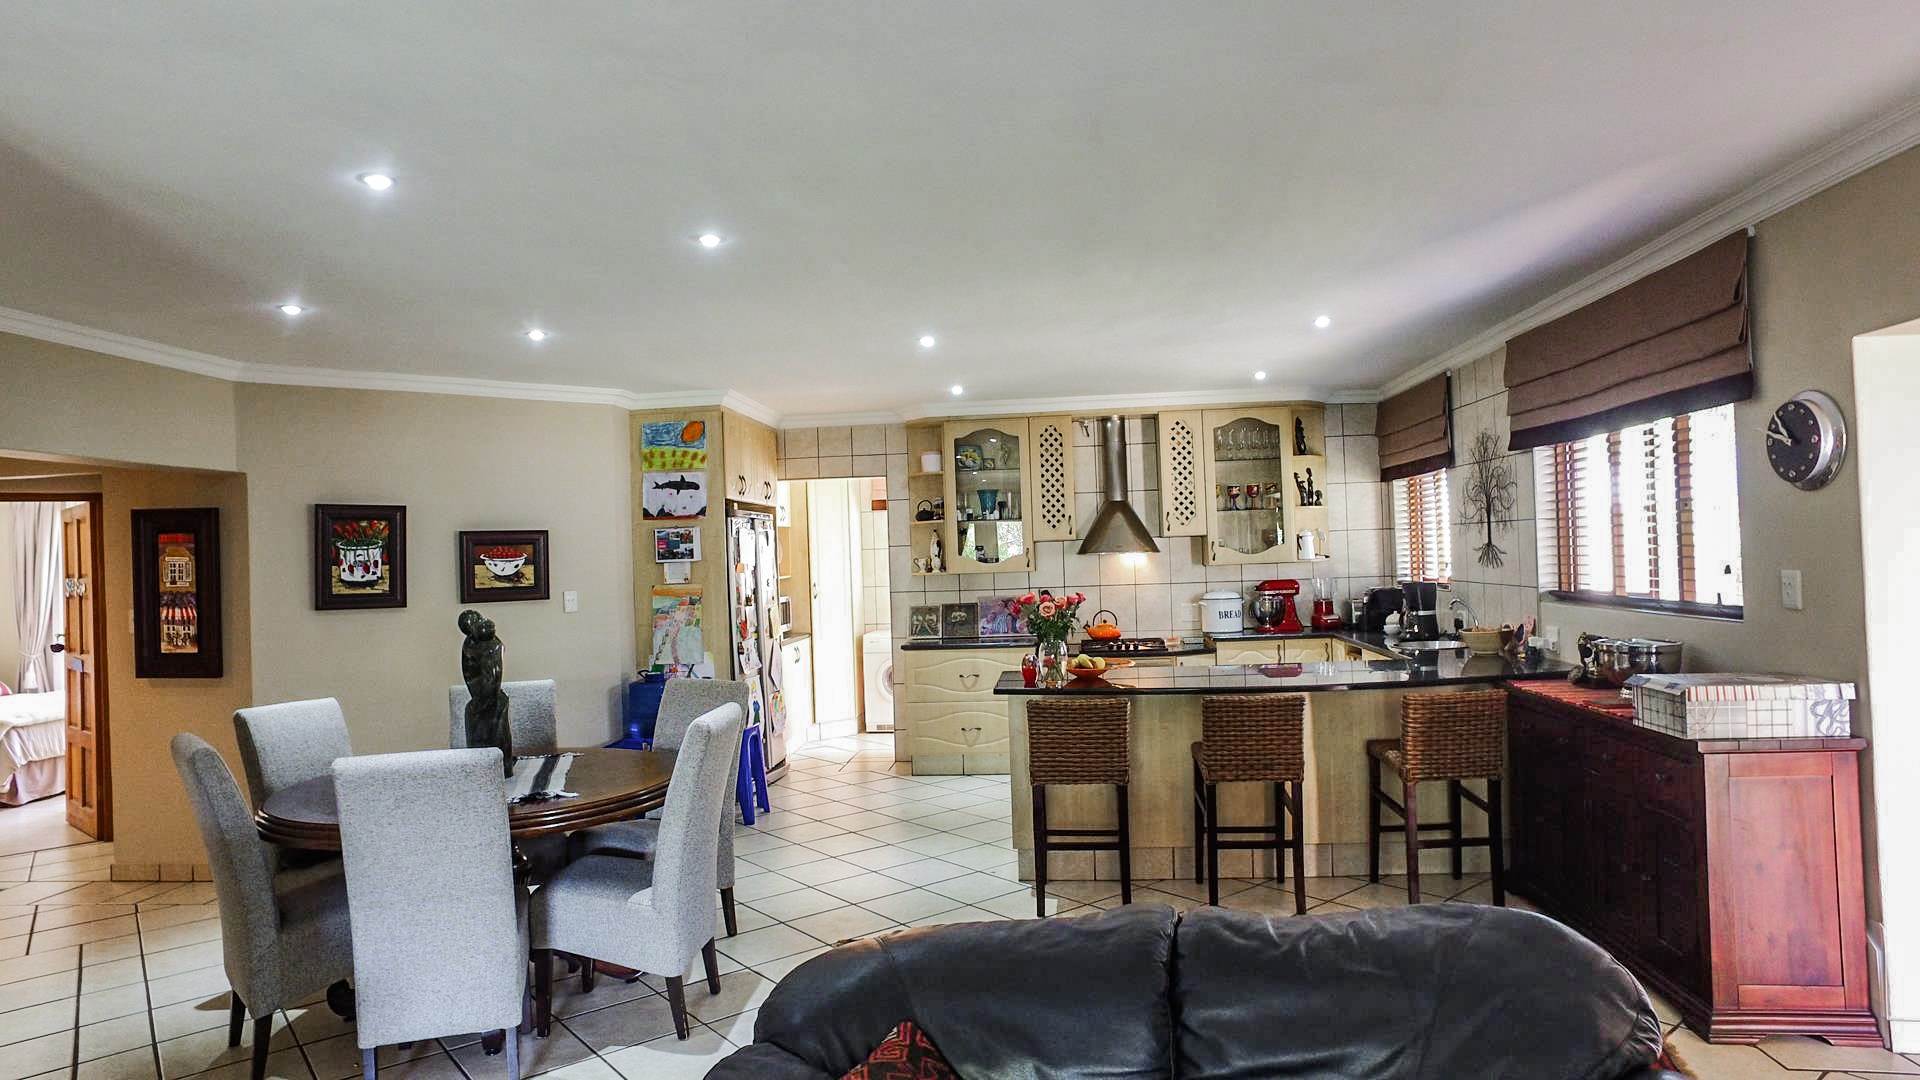 3 Bedroom House in Willow Acres Estate, Pretoria Pending Sale for R